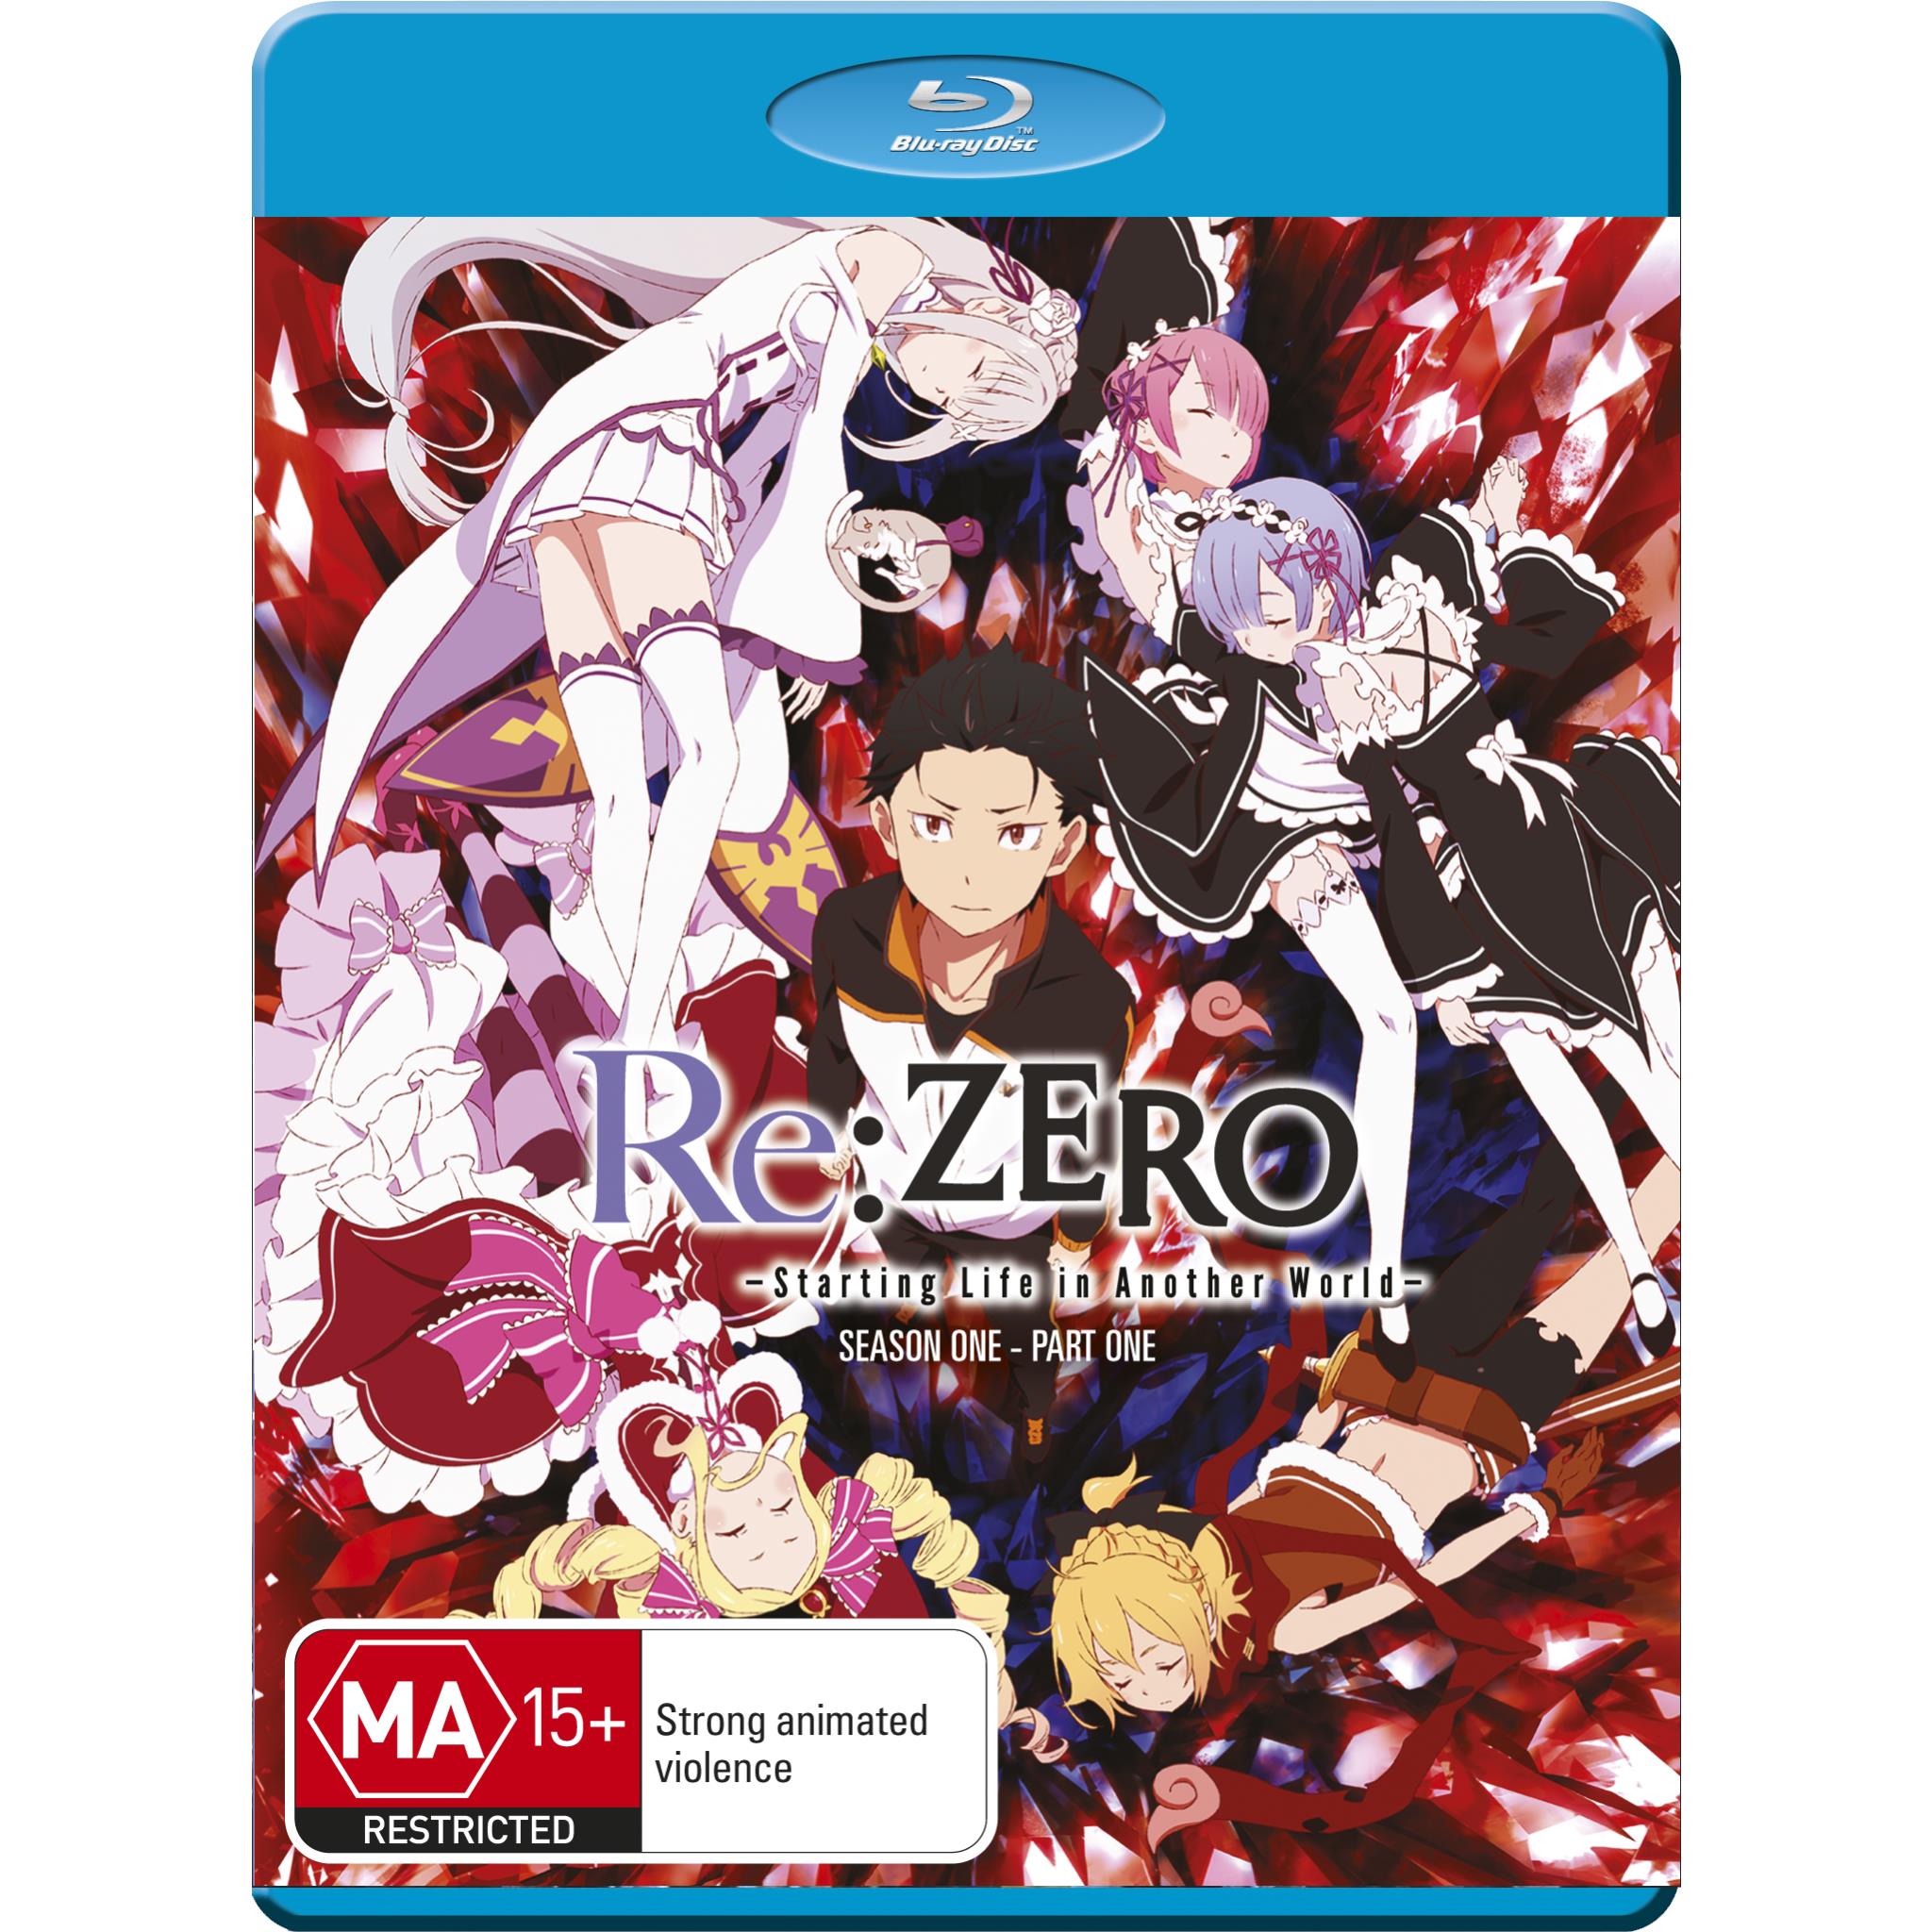 Anime Re:ZERO em Blu-ray - AnimesDVD